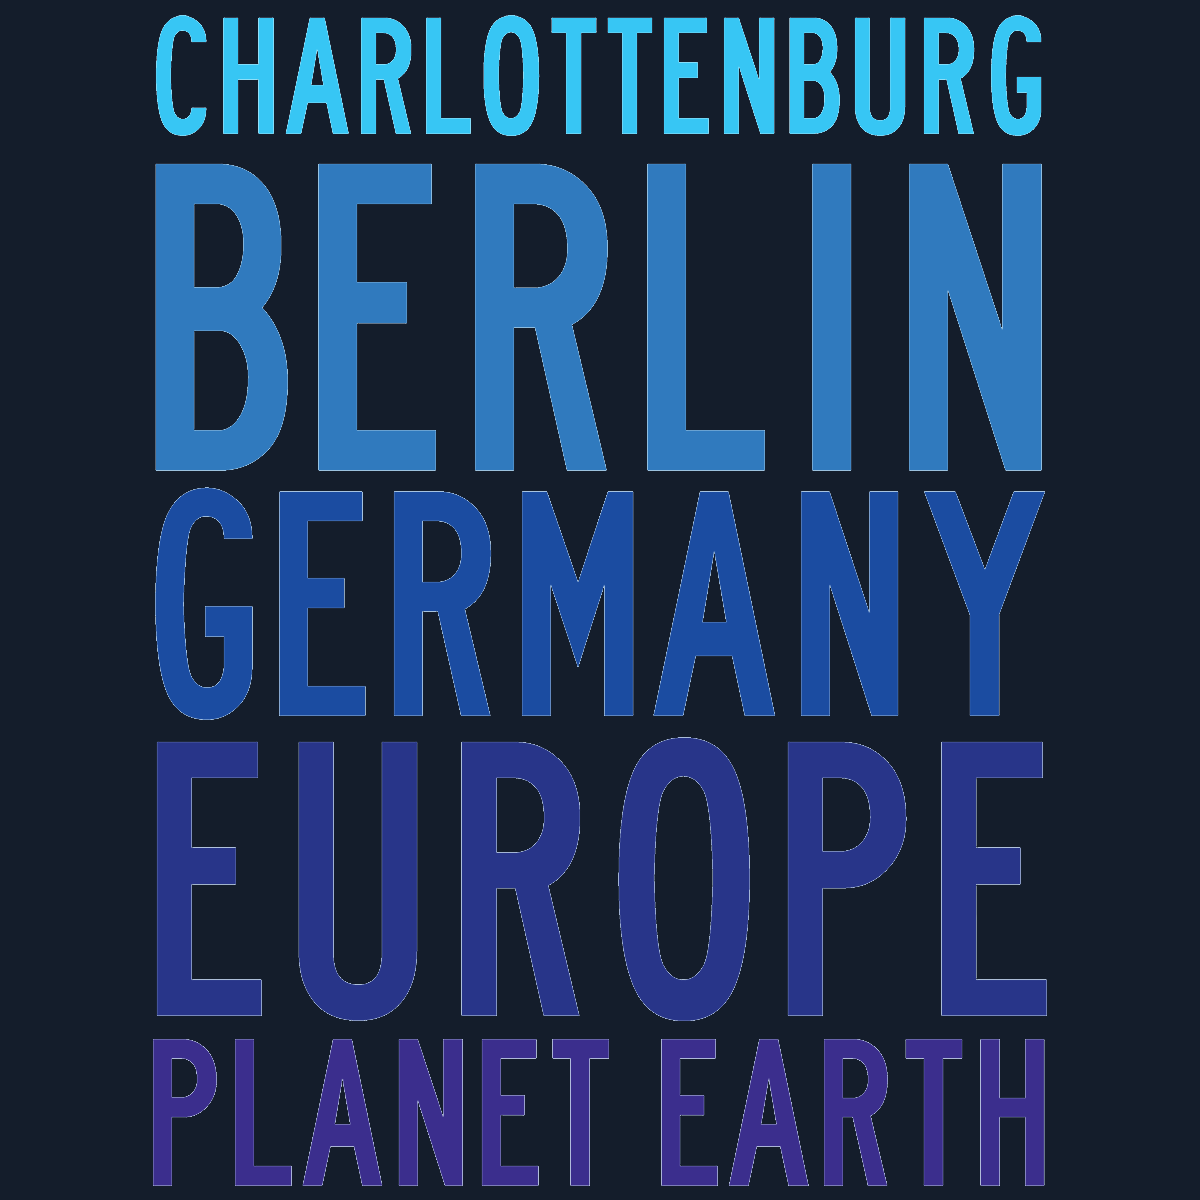 Charlottenburg - Earth